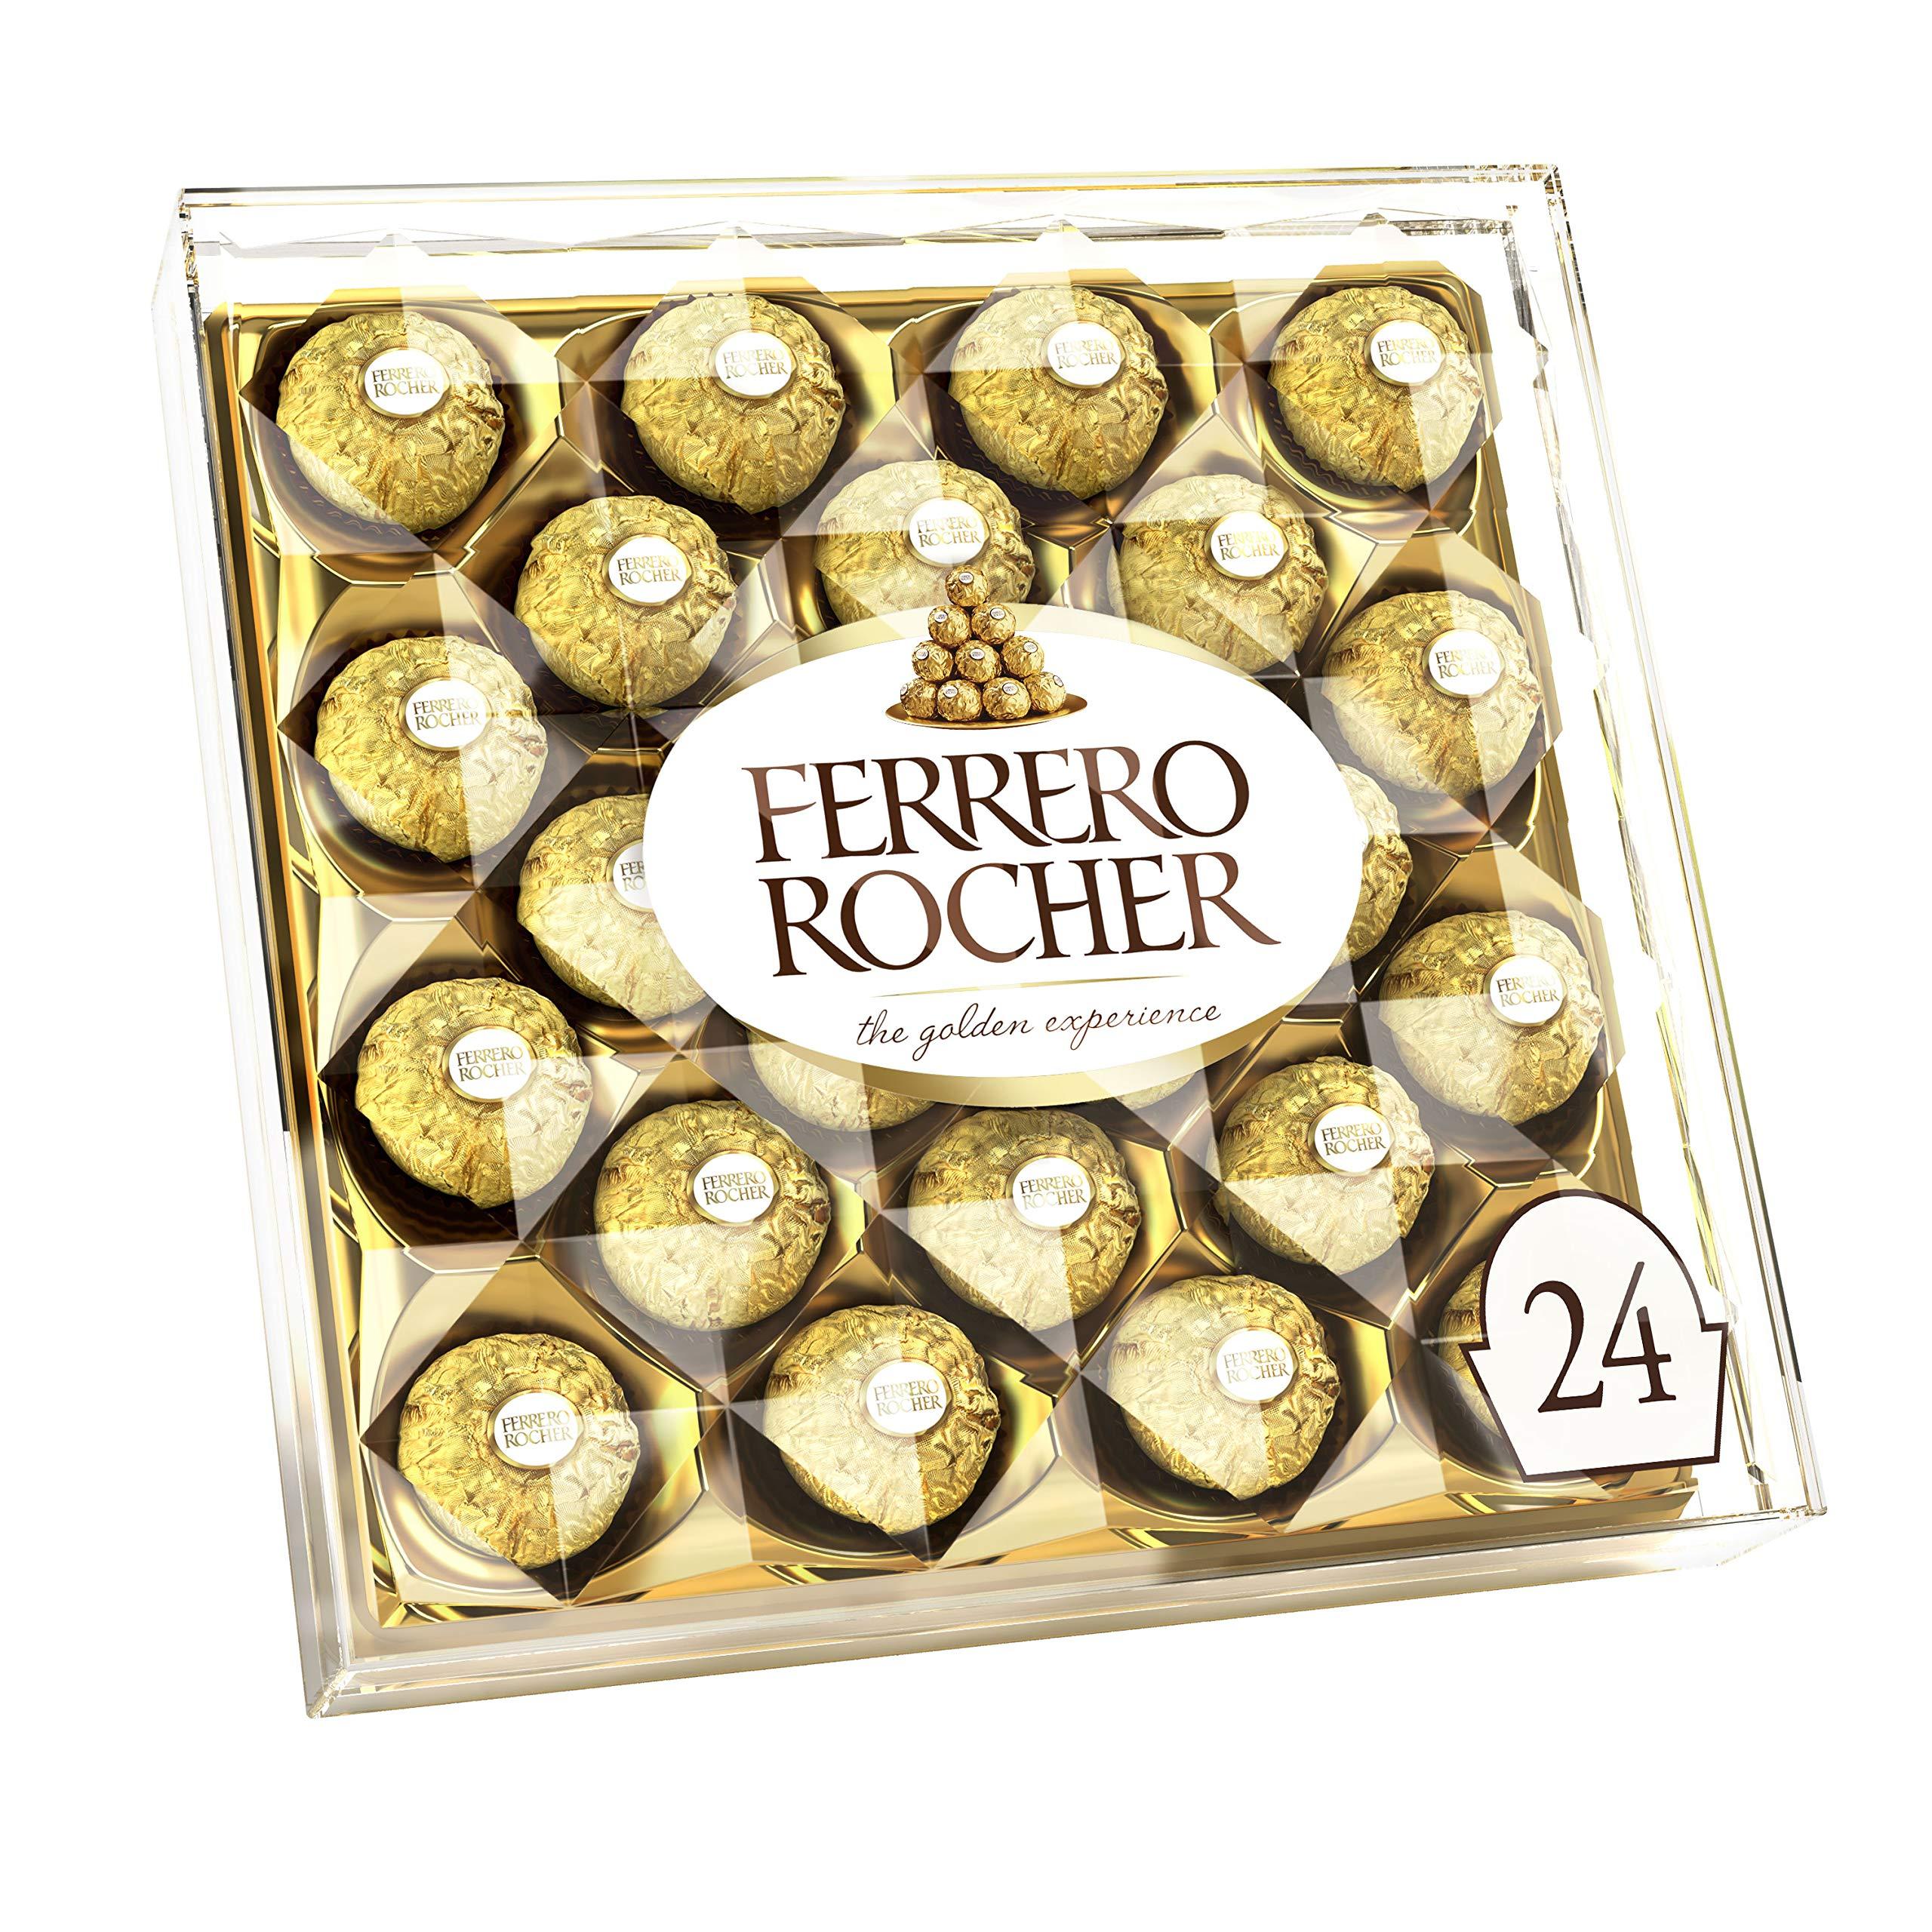 Ferrero Rocher Fine Hazelnut Milk Chocolate, 24 Count, Chocolate Candy Gift Box, 10.5 oz 24 Count (Pack of 1) Ferrero Rocher - image 2 of 7